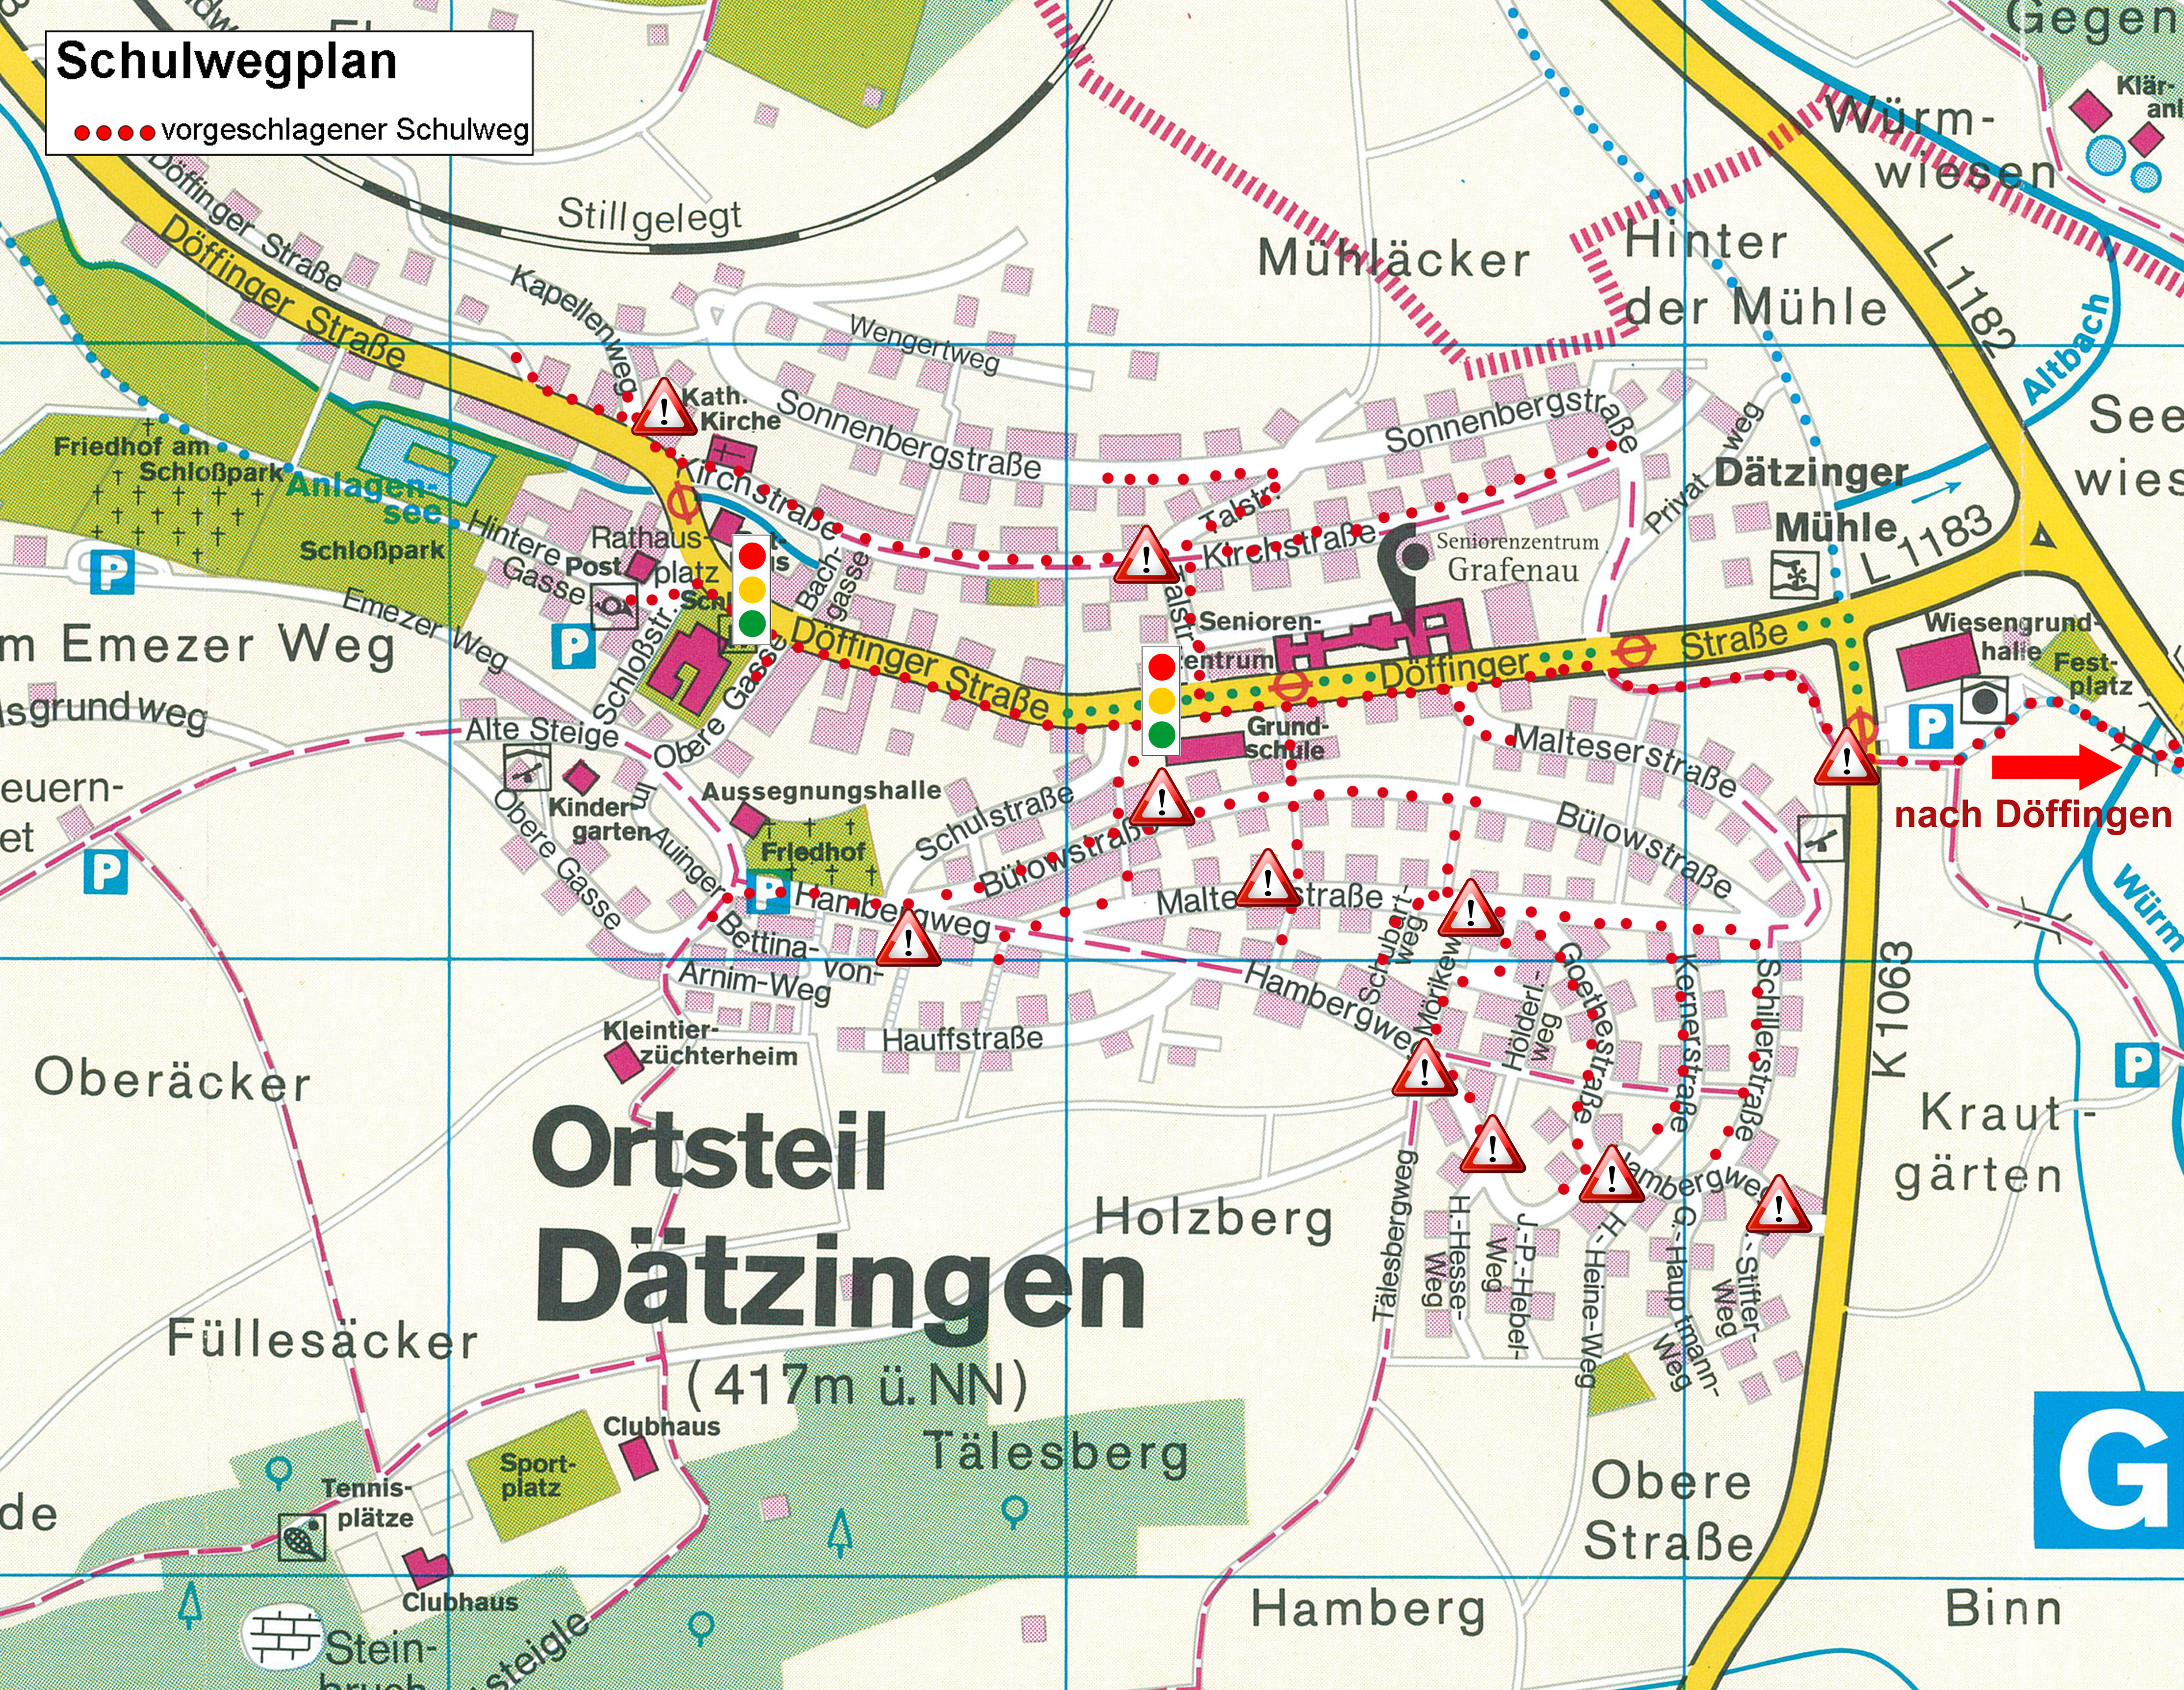 Schulwegplan zur Grundschule Dätzingen